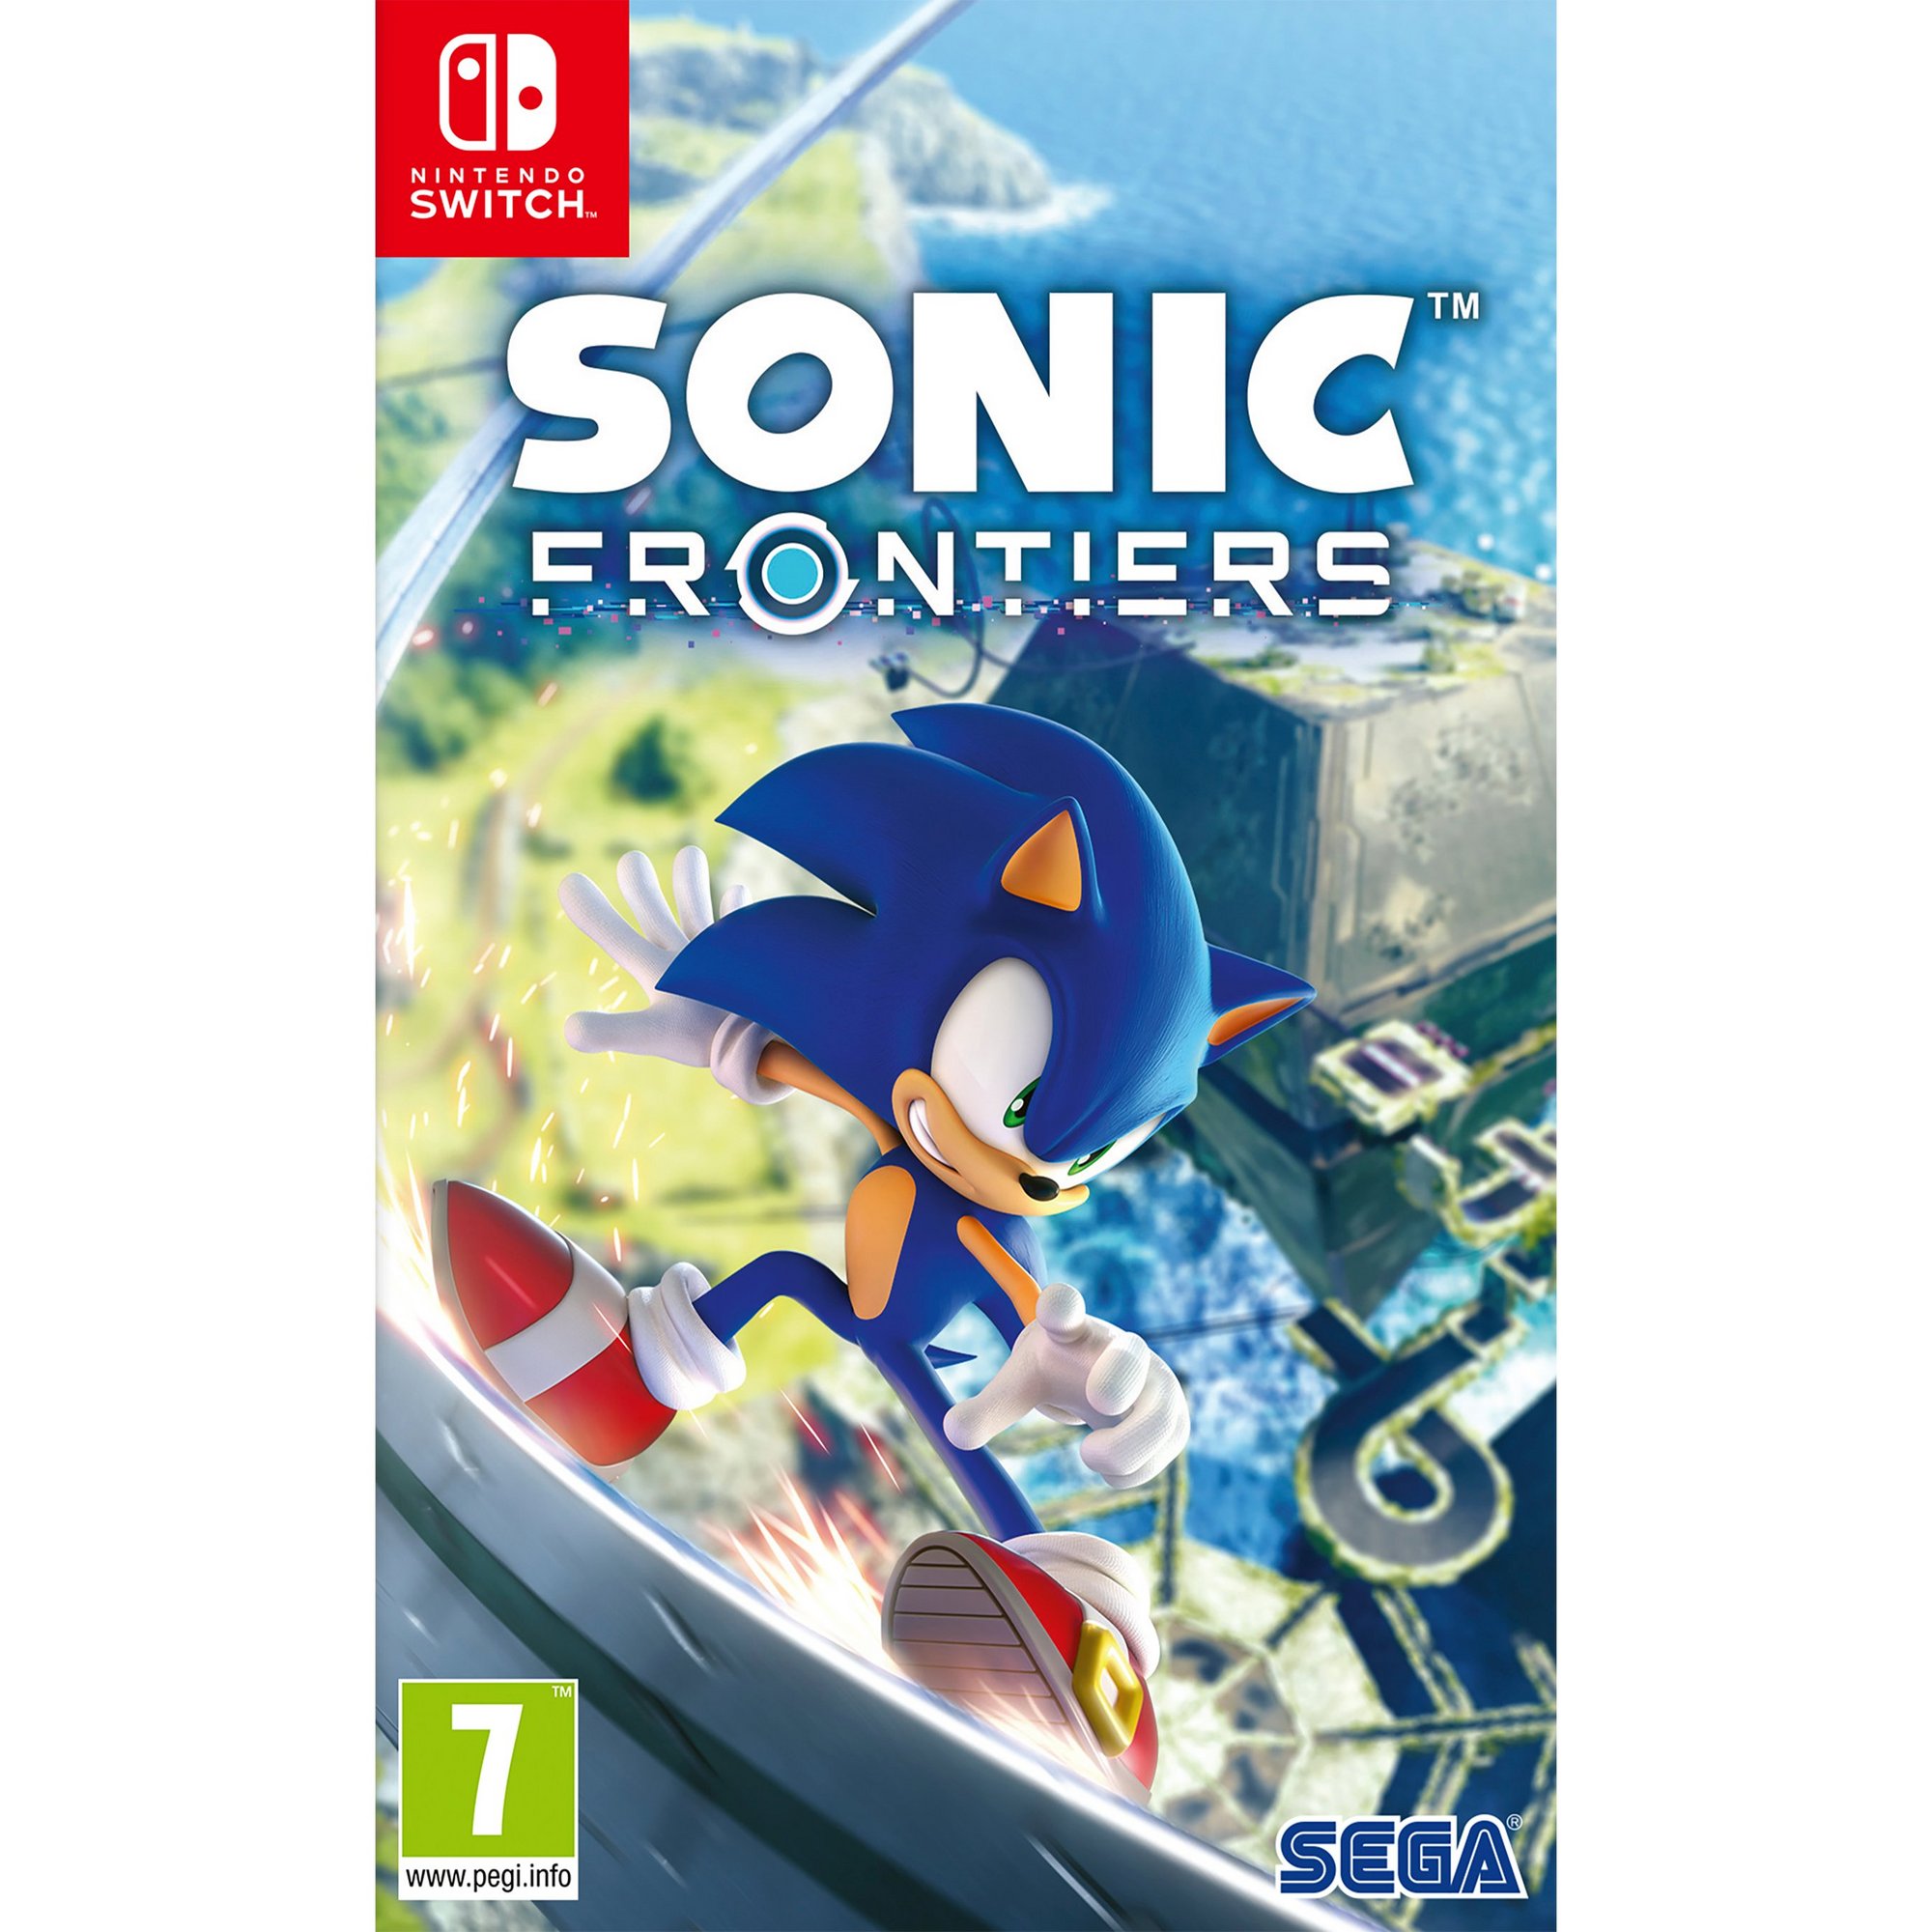 Nintendo Switch: Sonic Frontiers